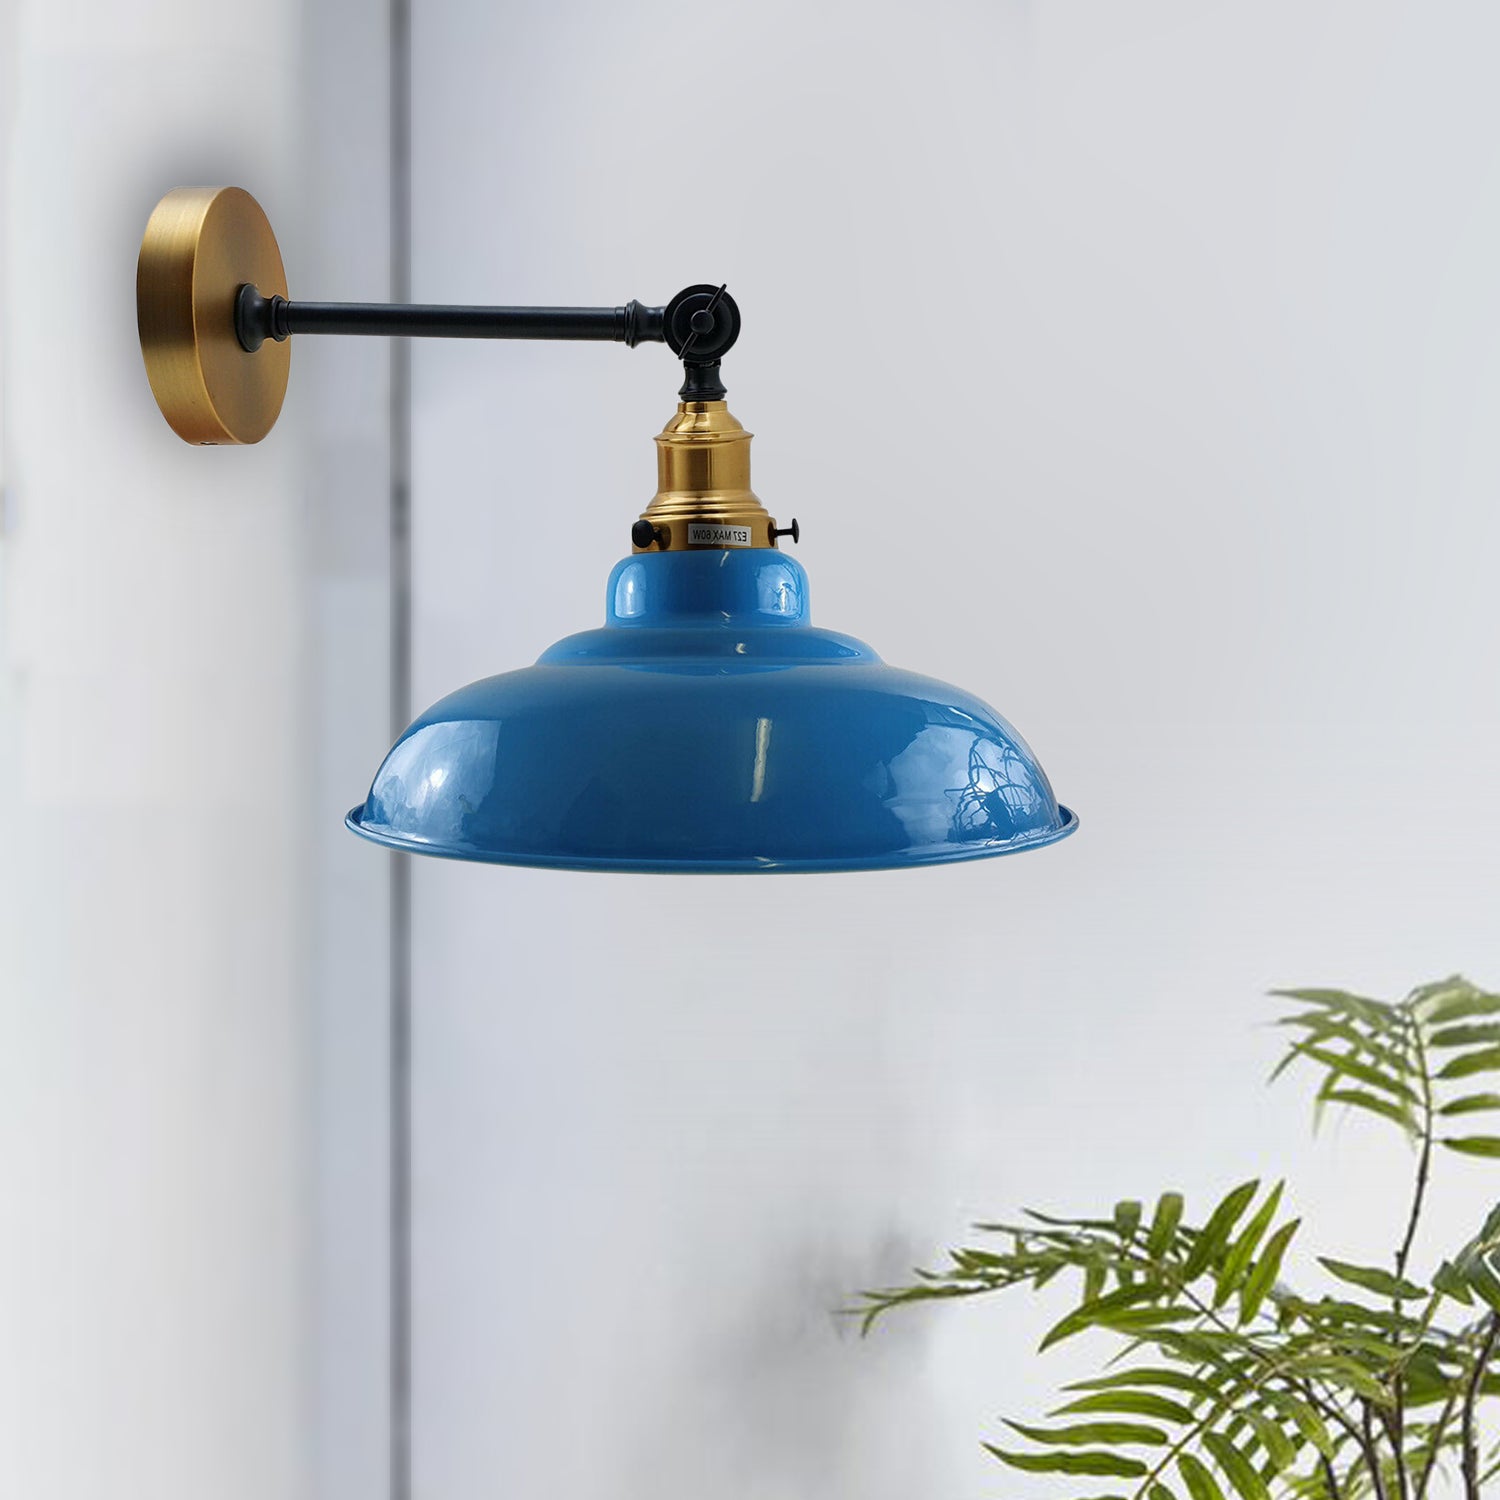 Wall Light Fixture Loft Style Industrial Wall Sconce - Light Blue